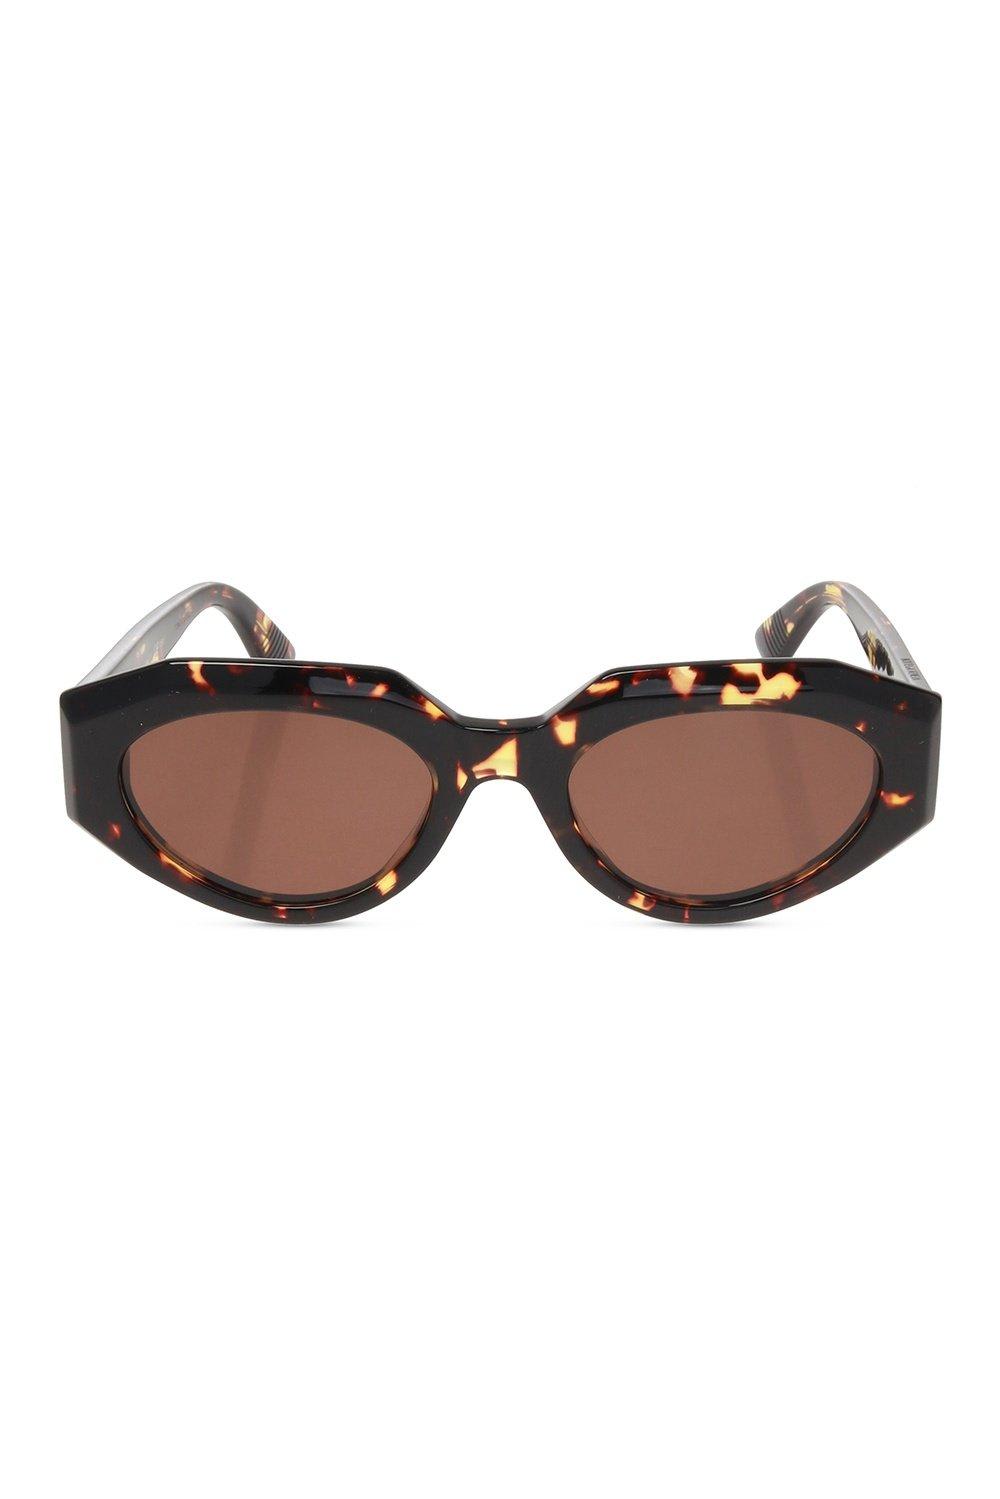 Bottega Veneta Eyewear Cat-Eye Frame Sunglasses